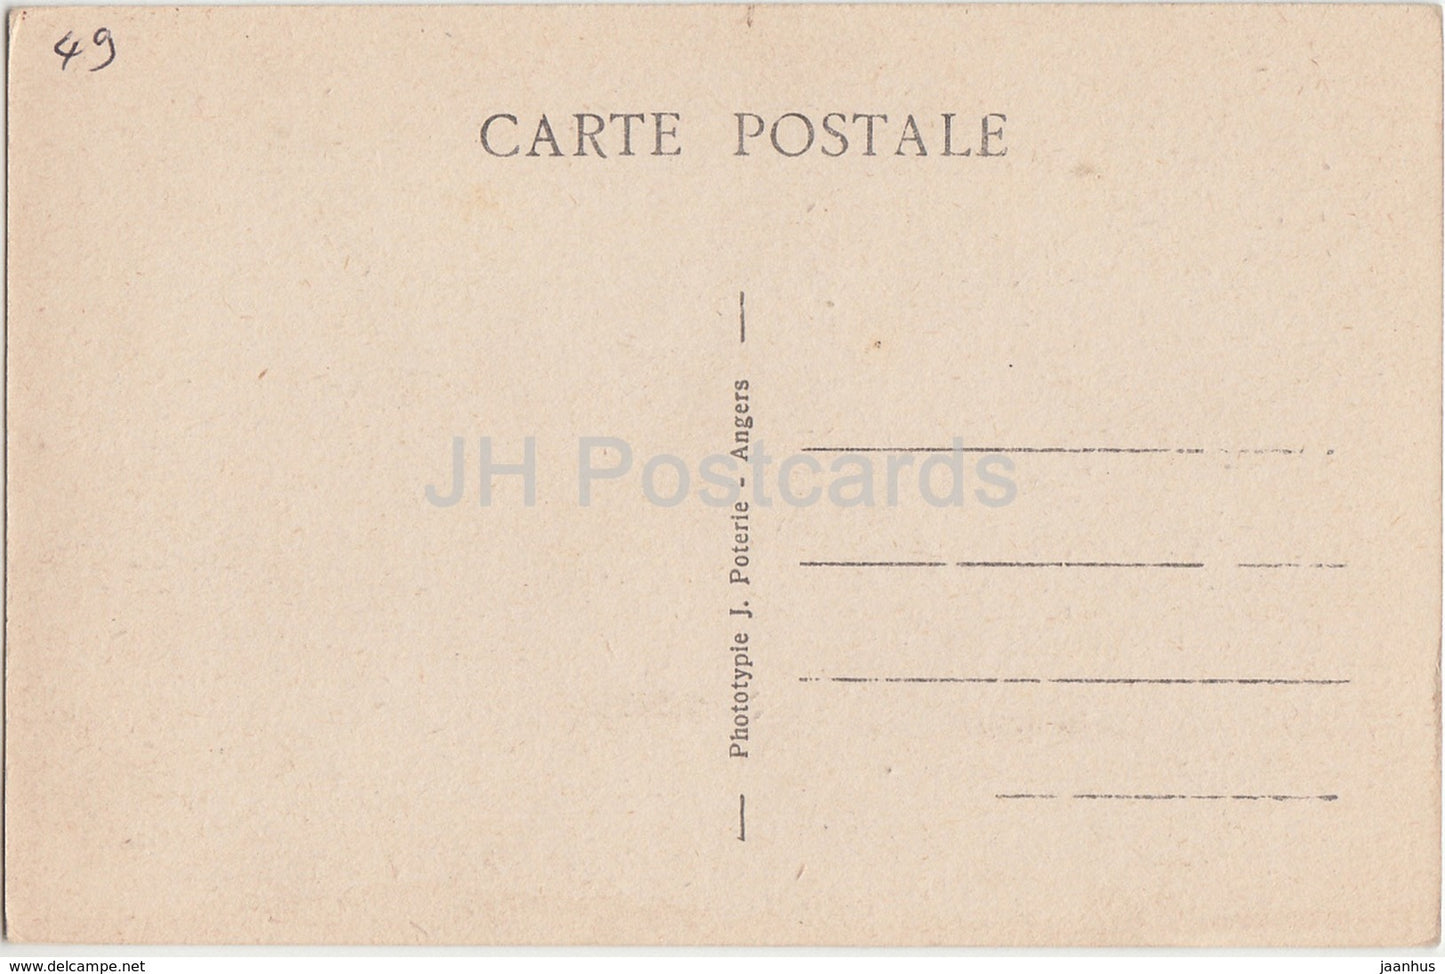 Bauge - Le Chateau - castle - old postcard - France - unused